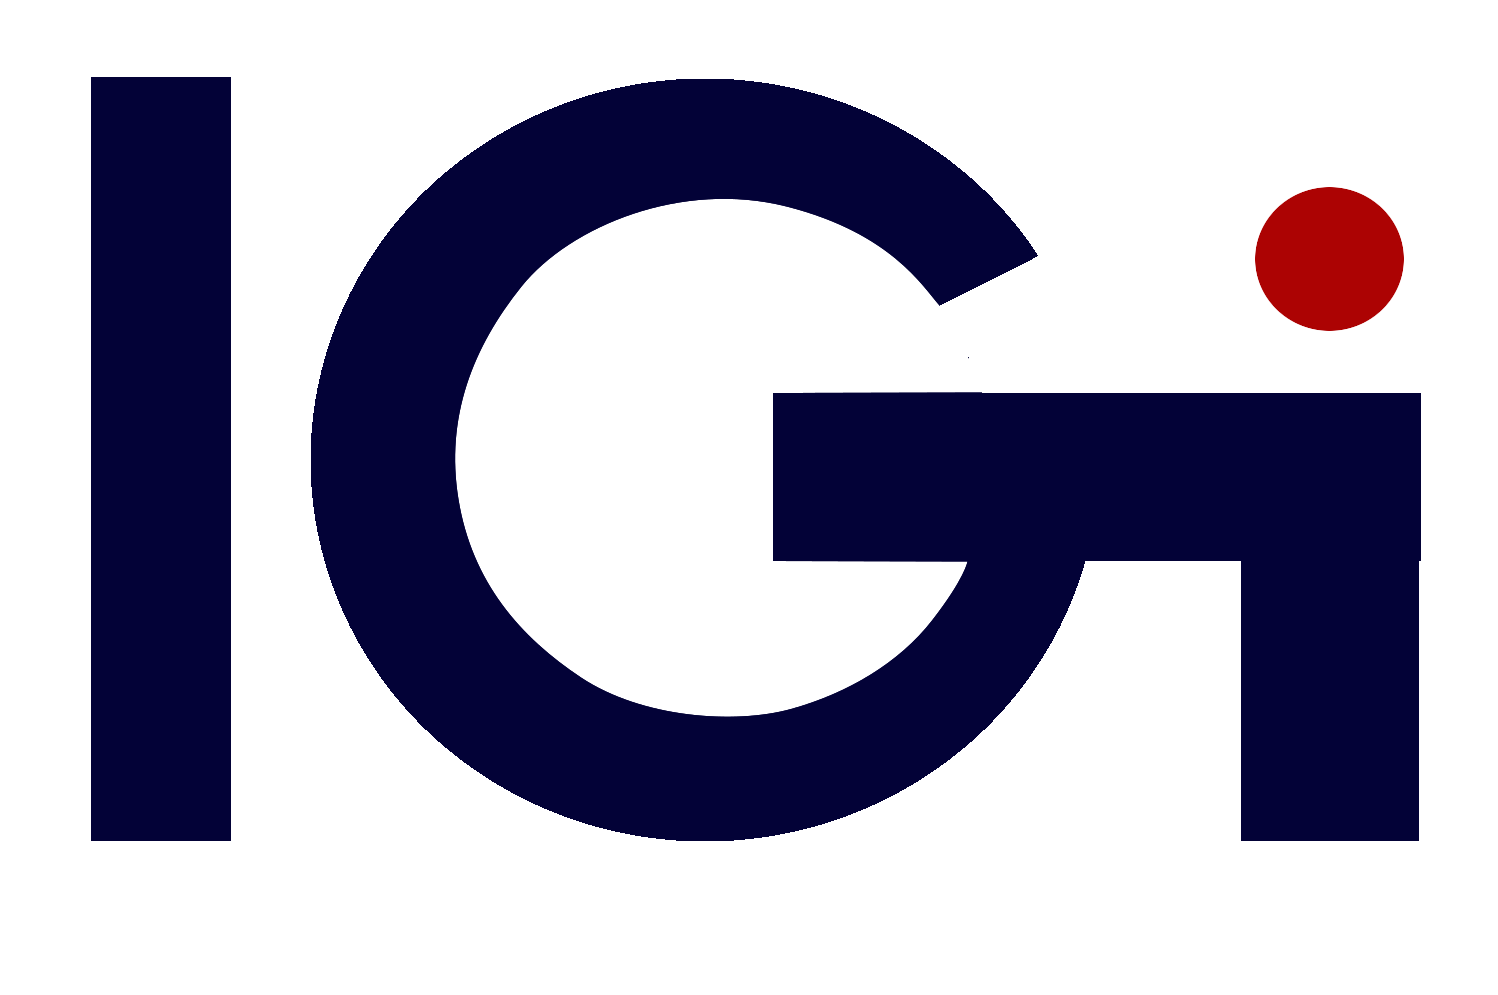 IGI-GAMSTAR Insurance Company Ltd